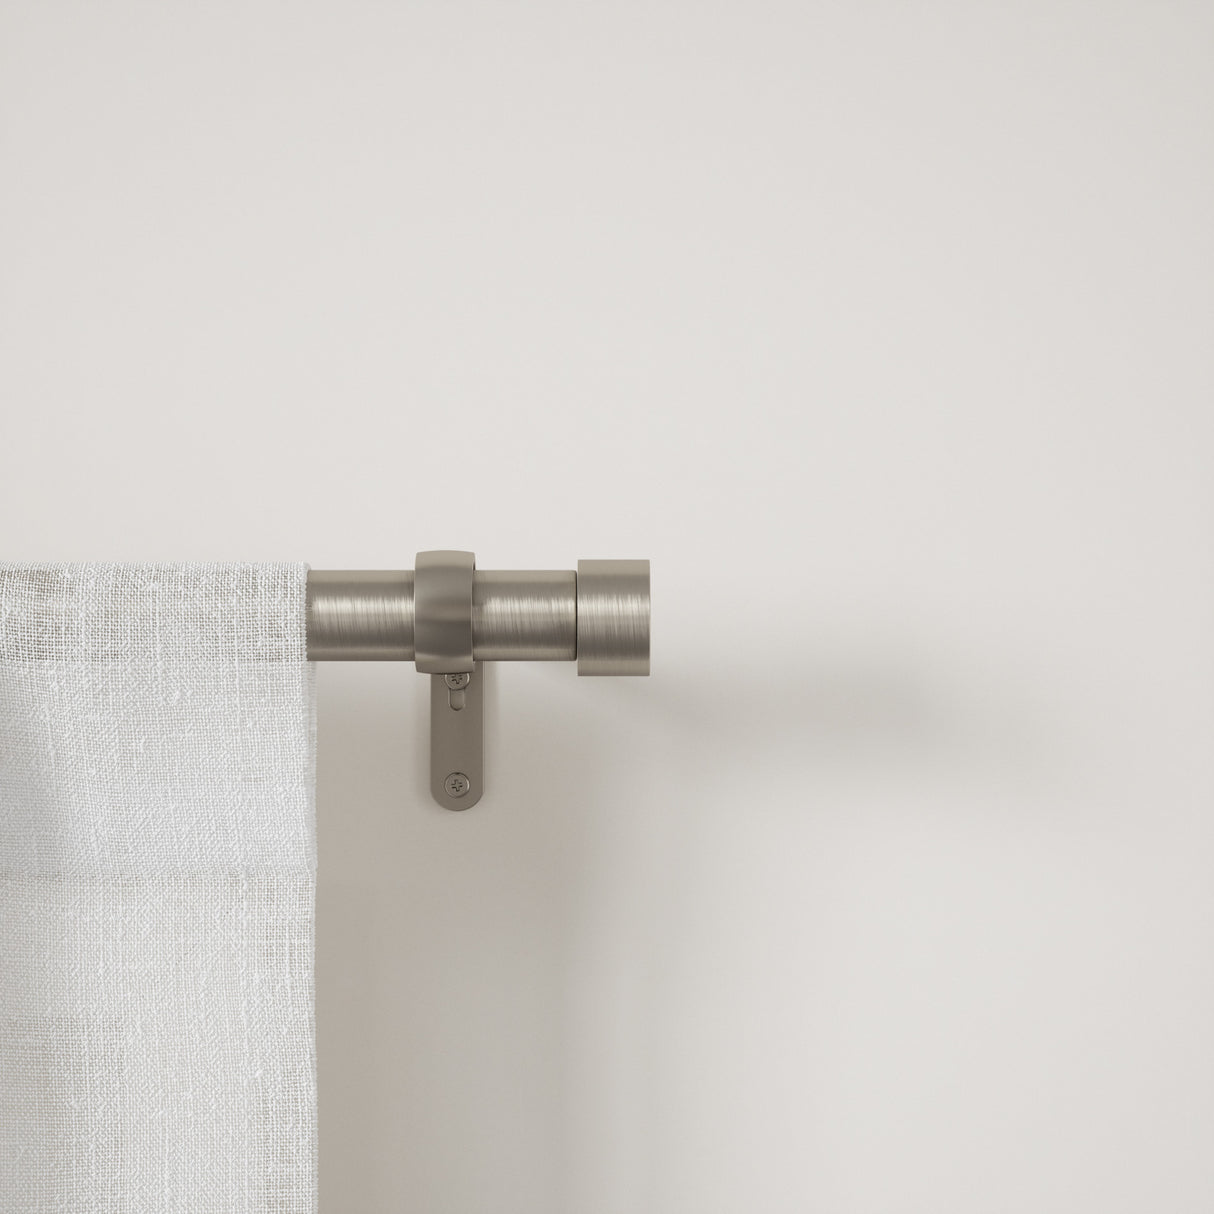 Single Curtain Rods | color: Nickel | size: 120-180" (305-457 cm) | diameter: 1" (2.5 cm) | Hover